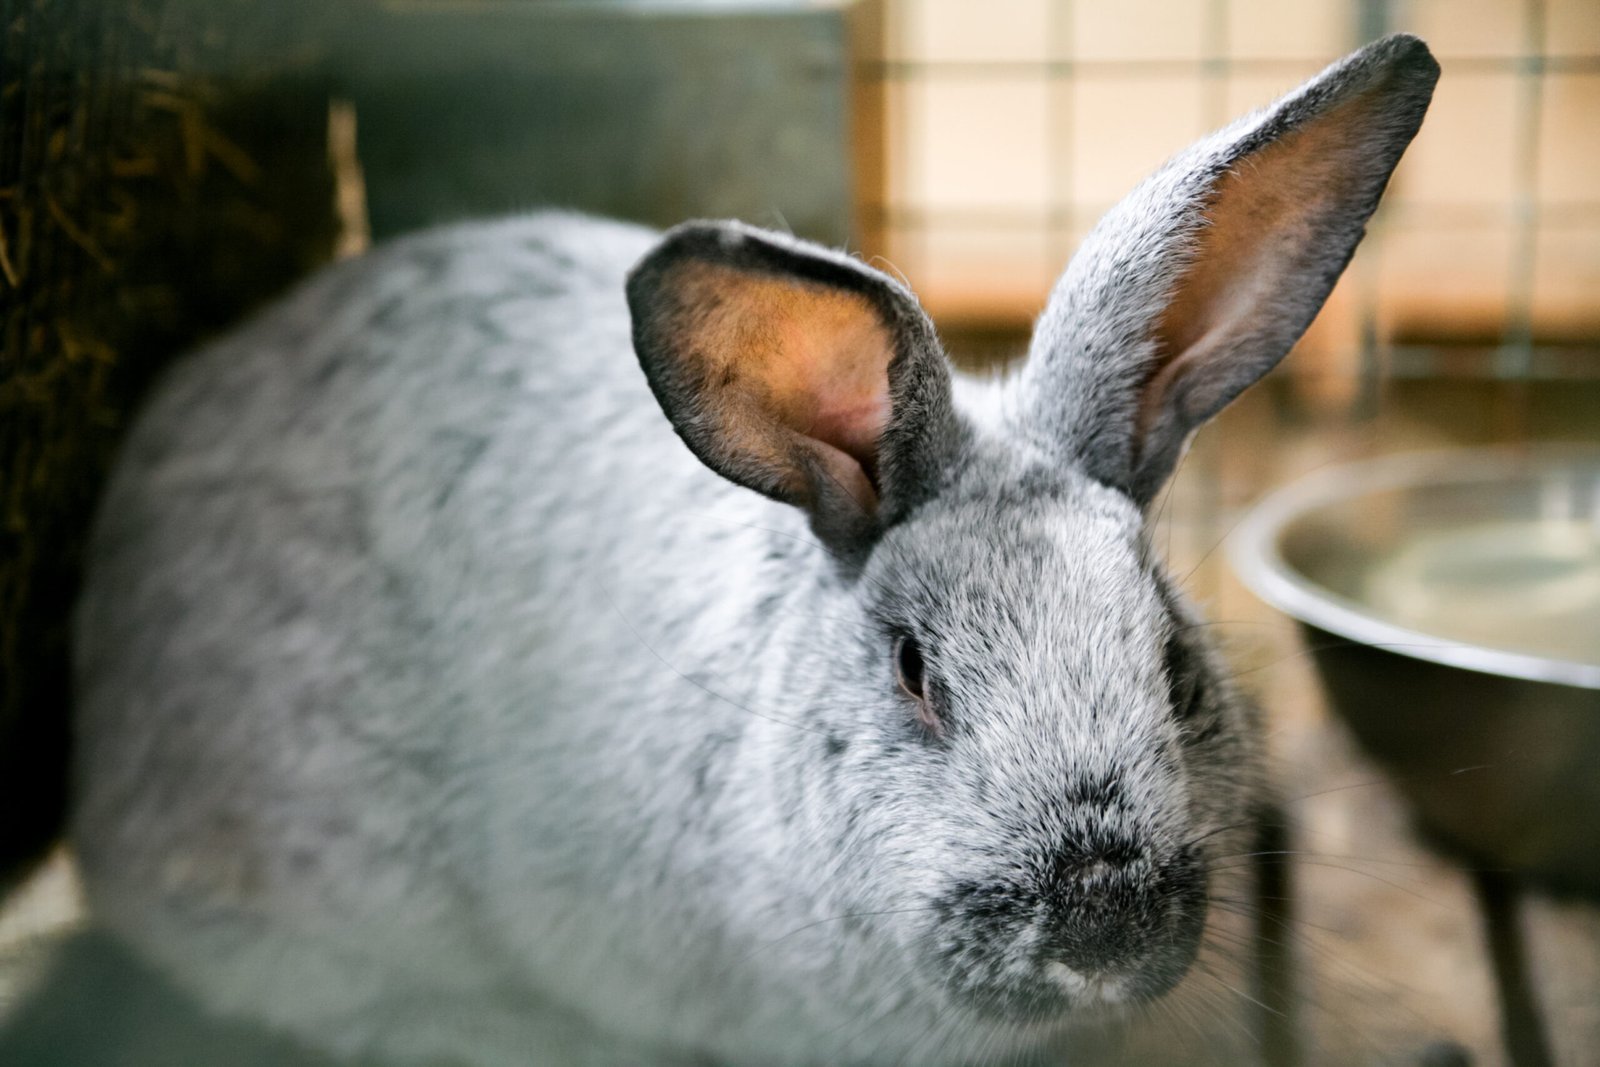 A Silver rabbit breed